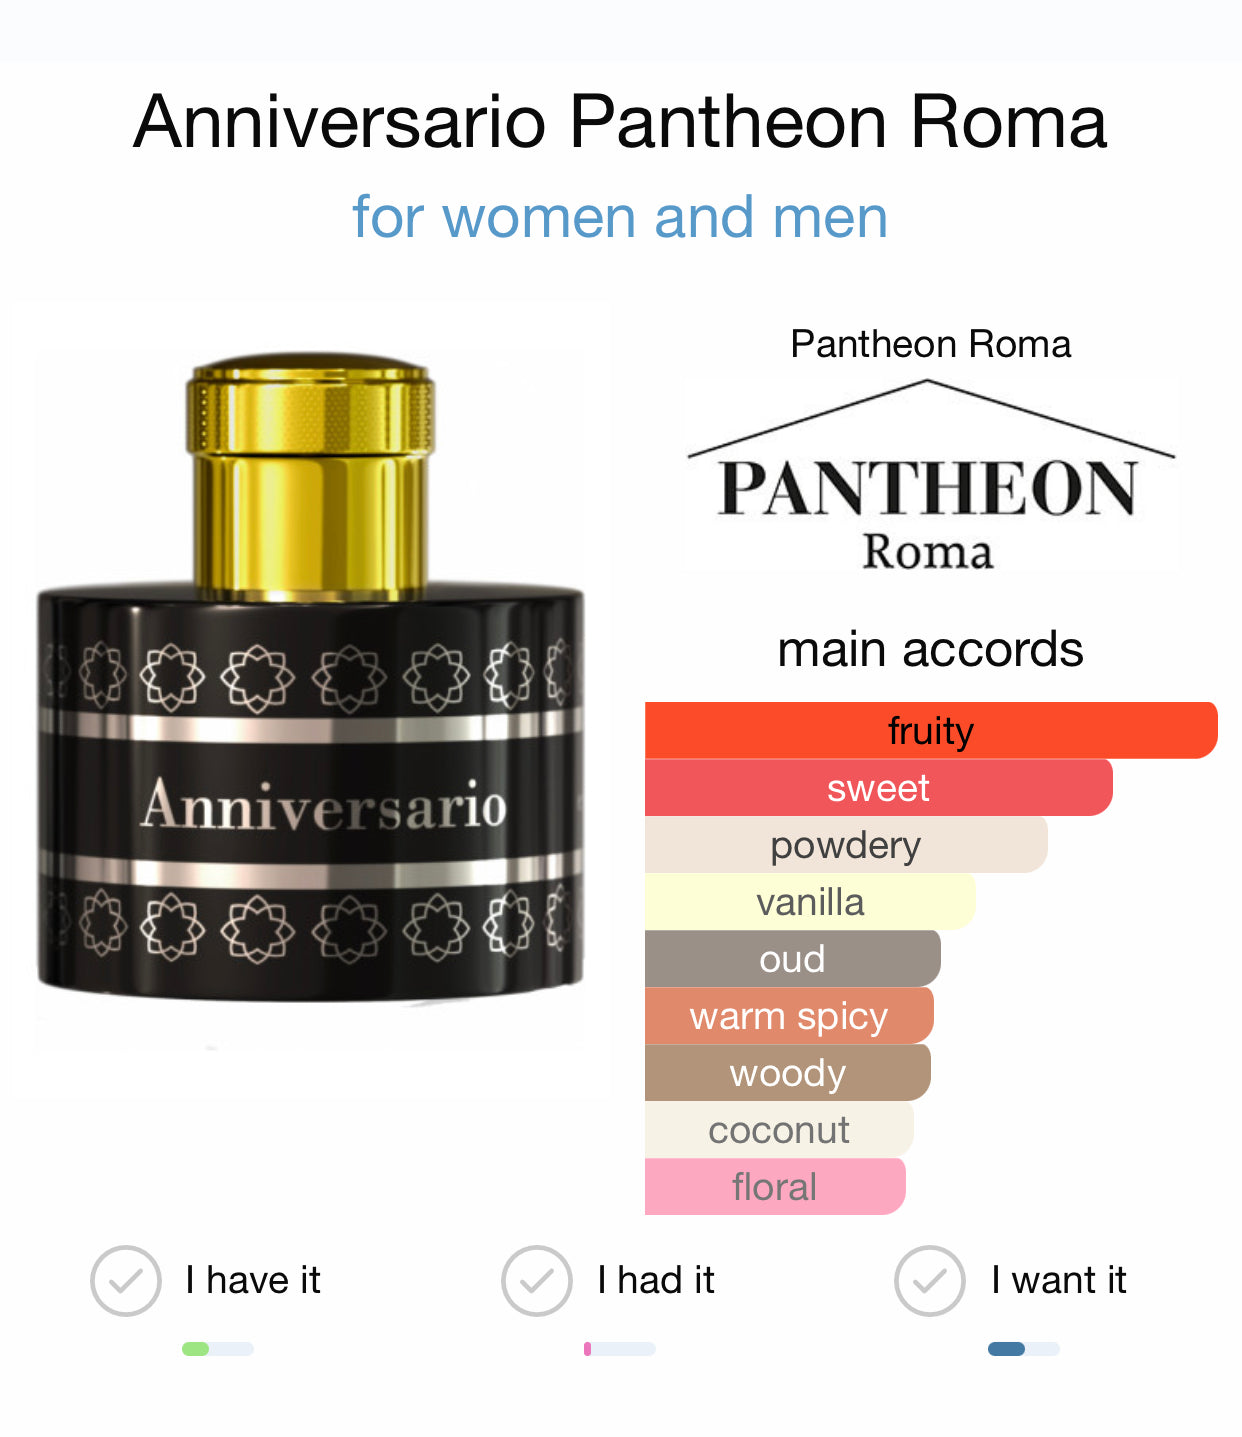 ANNIVERSARIO - PANTHEON ROMA